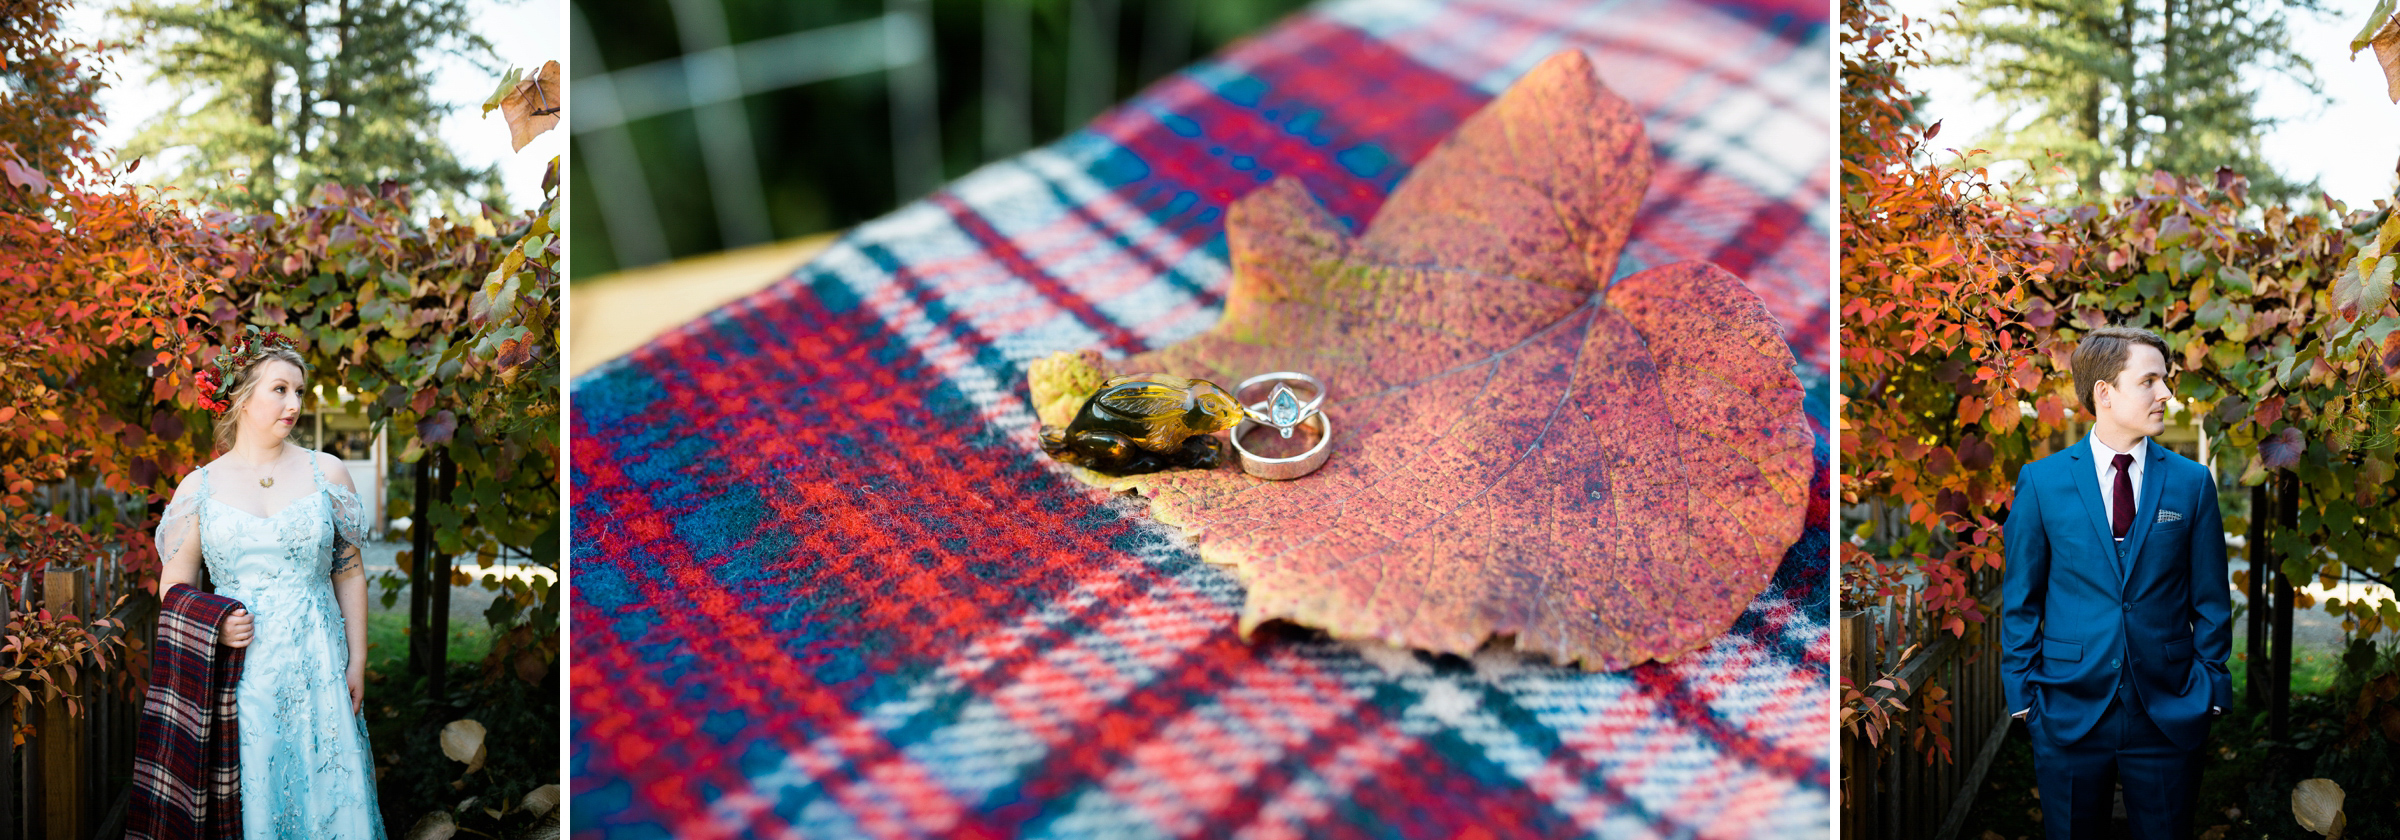 11-Black-Diamond-Gardens-Wedding-Seattle-Photographer-Bride-Groom-Portraits-Fall-Autumn-Leaves-Plaid